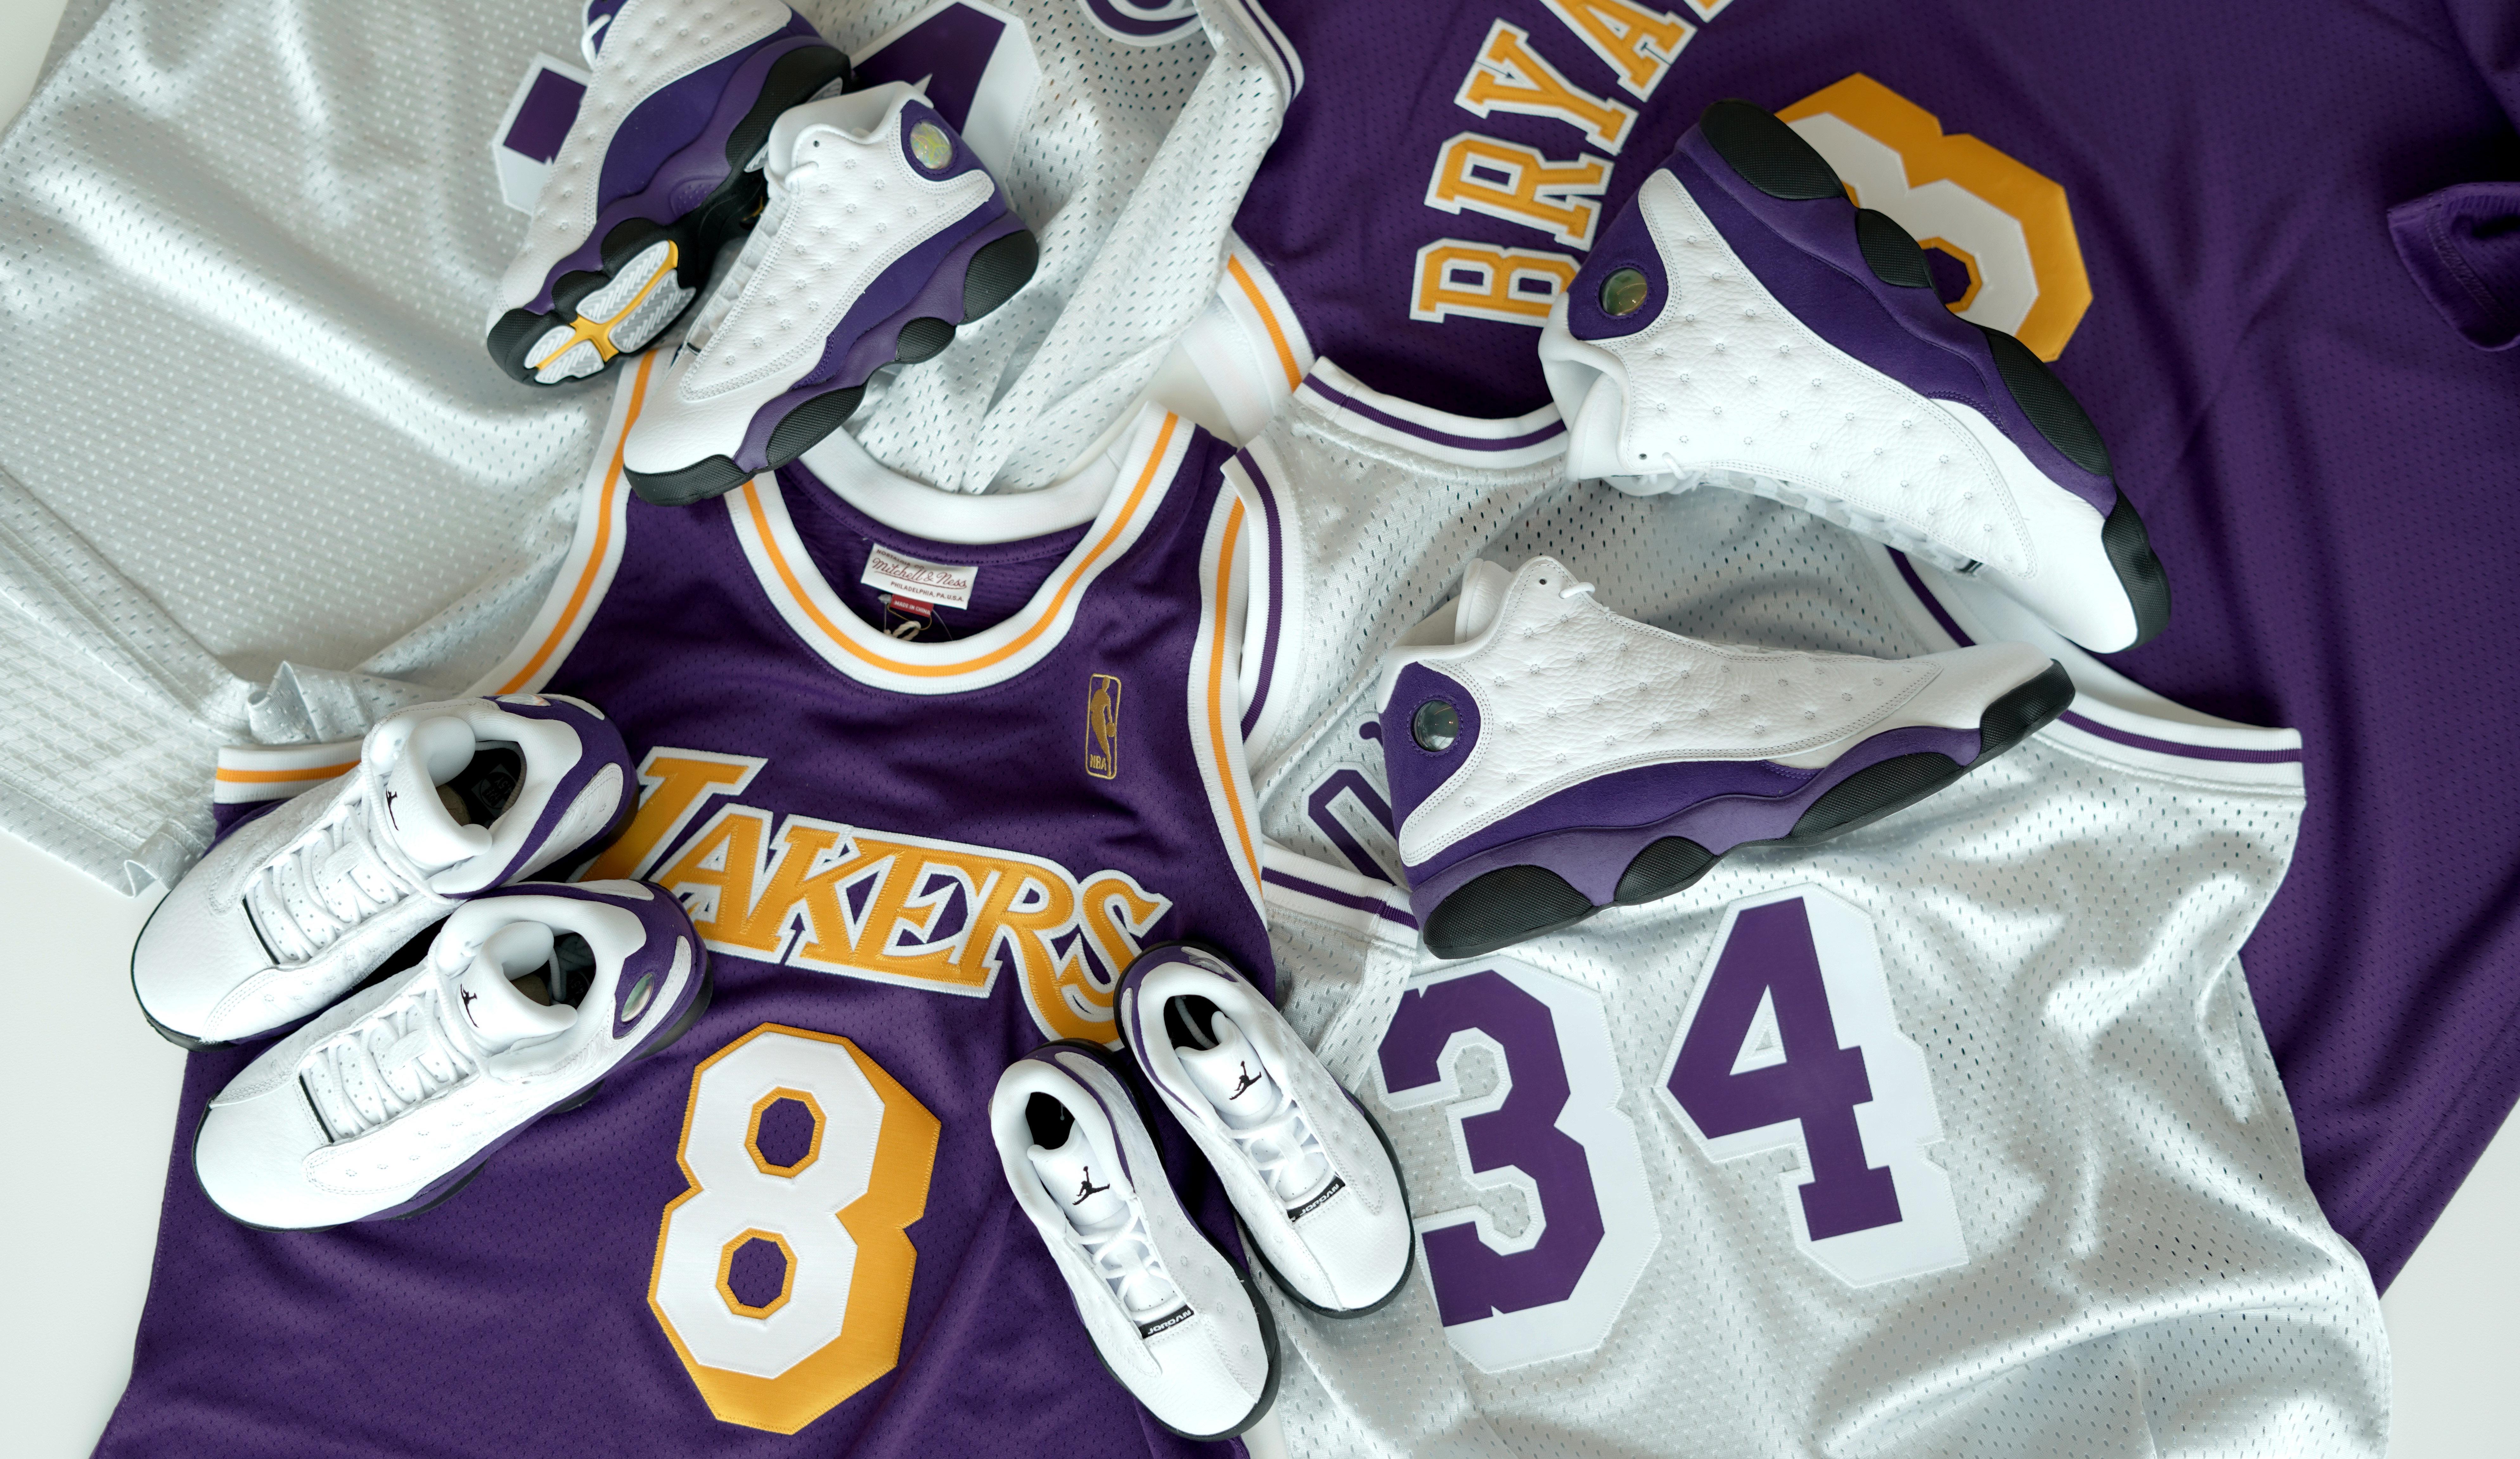 Men's Lakers 23 Print Casual Sports Vest Black Basketball Uniforms